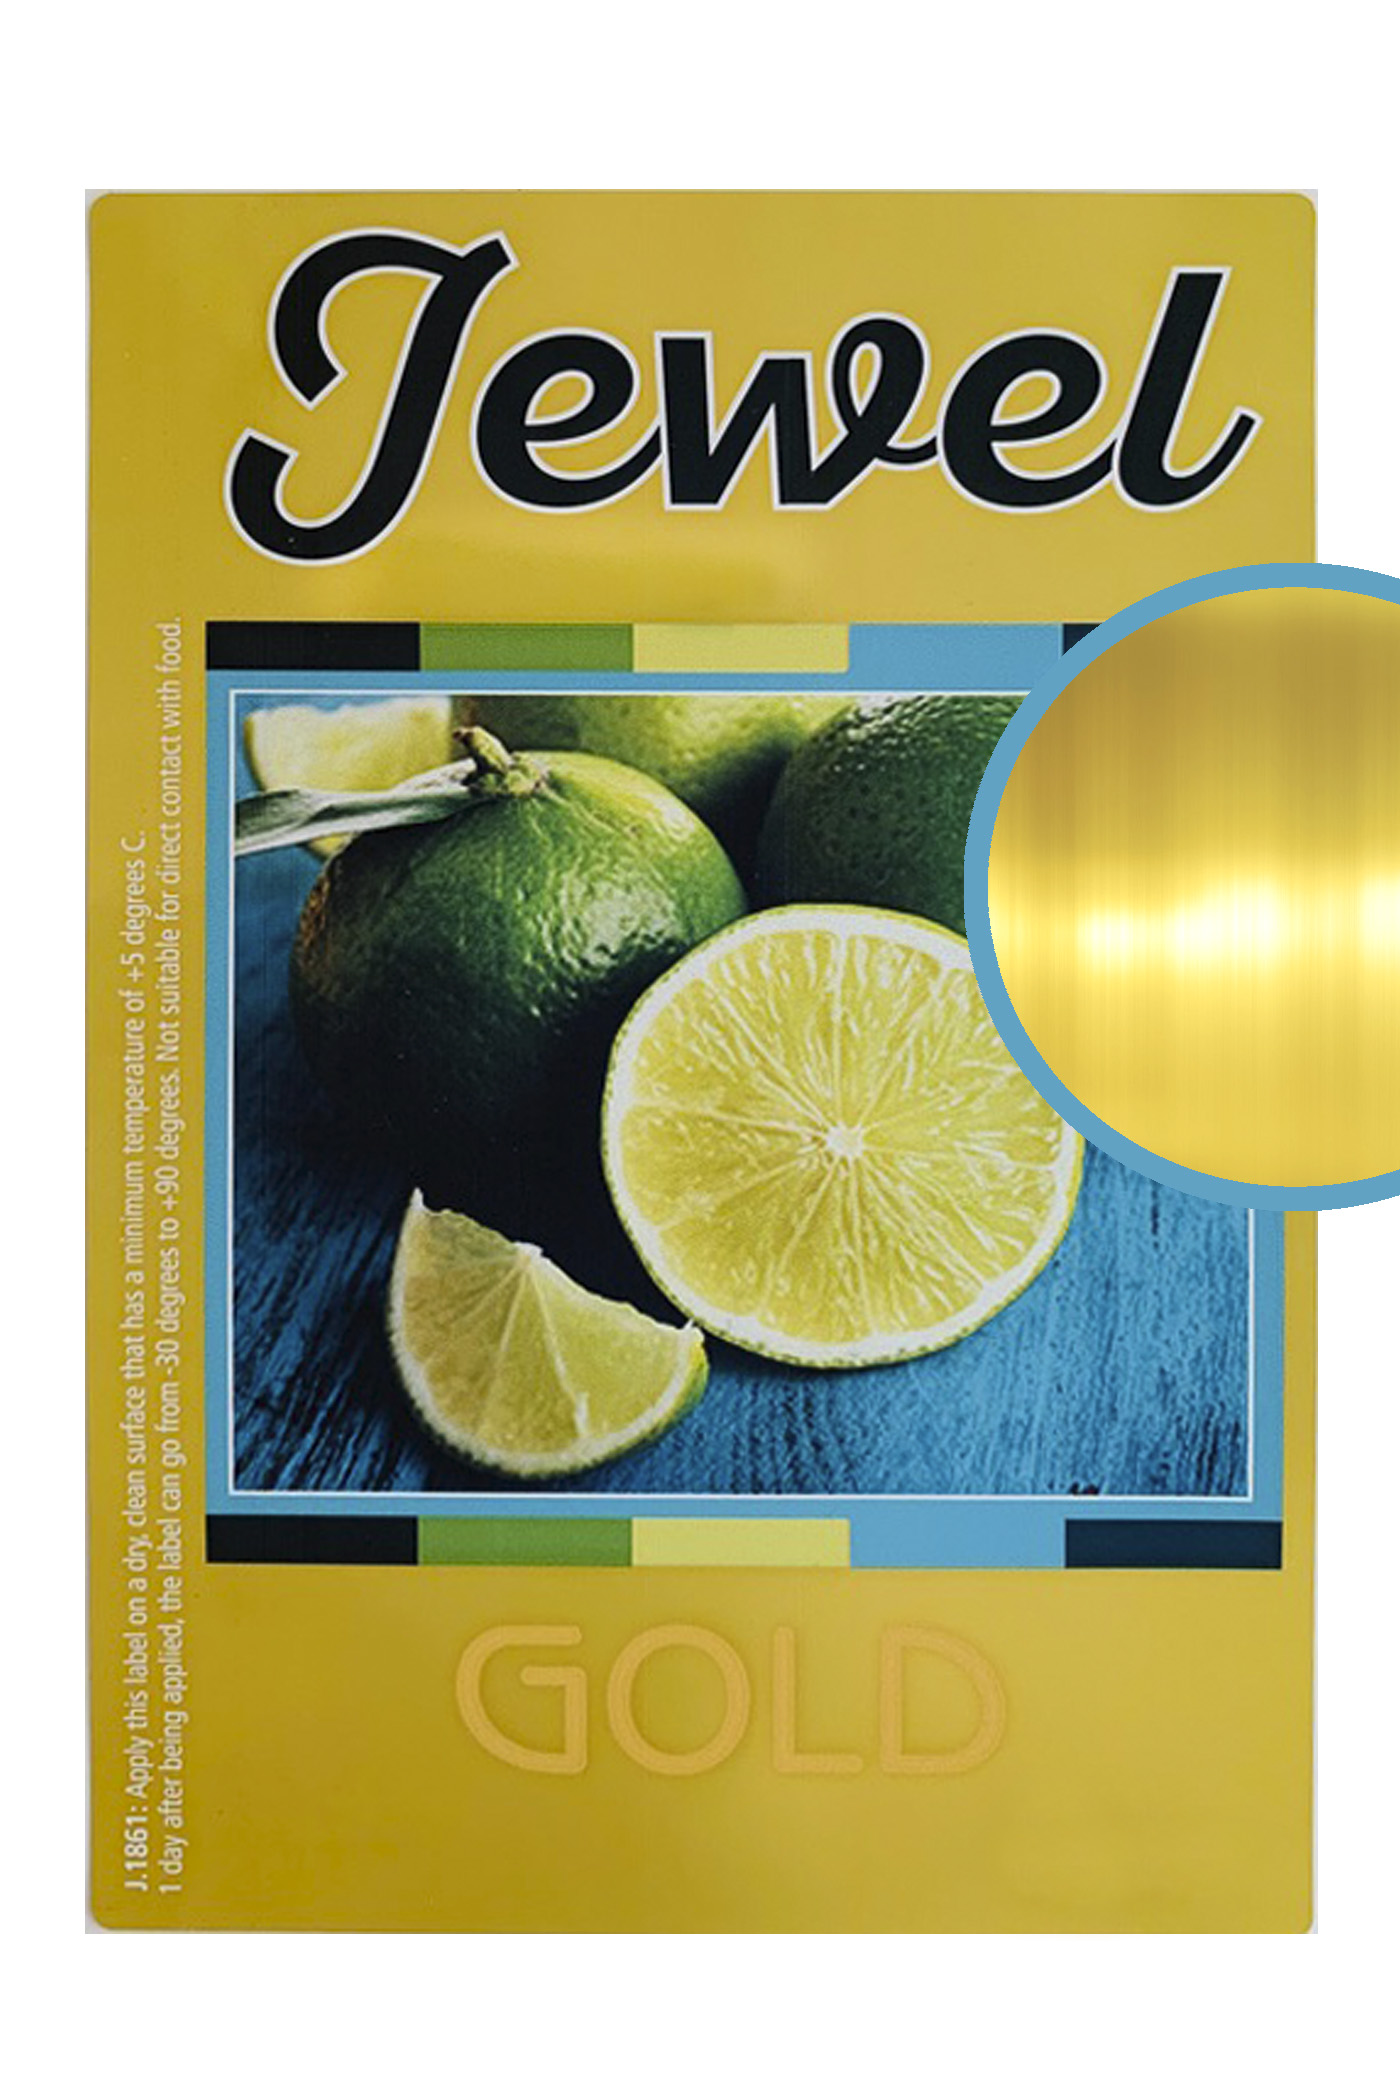 Label jewel gold